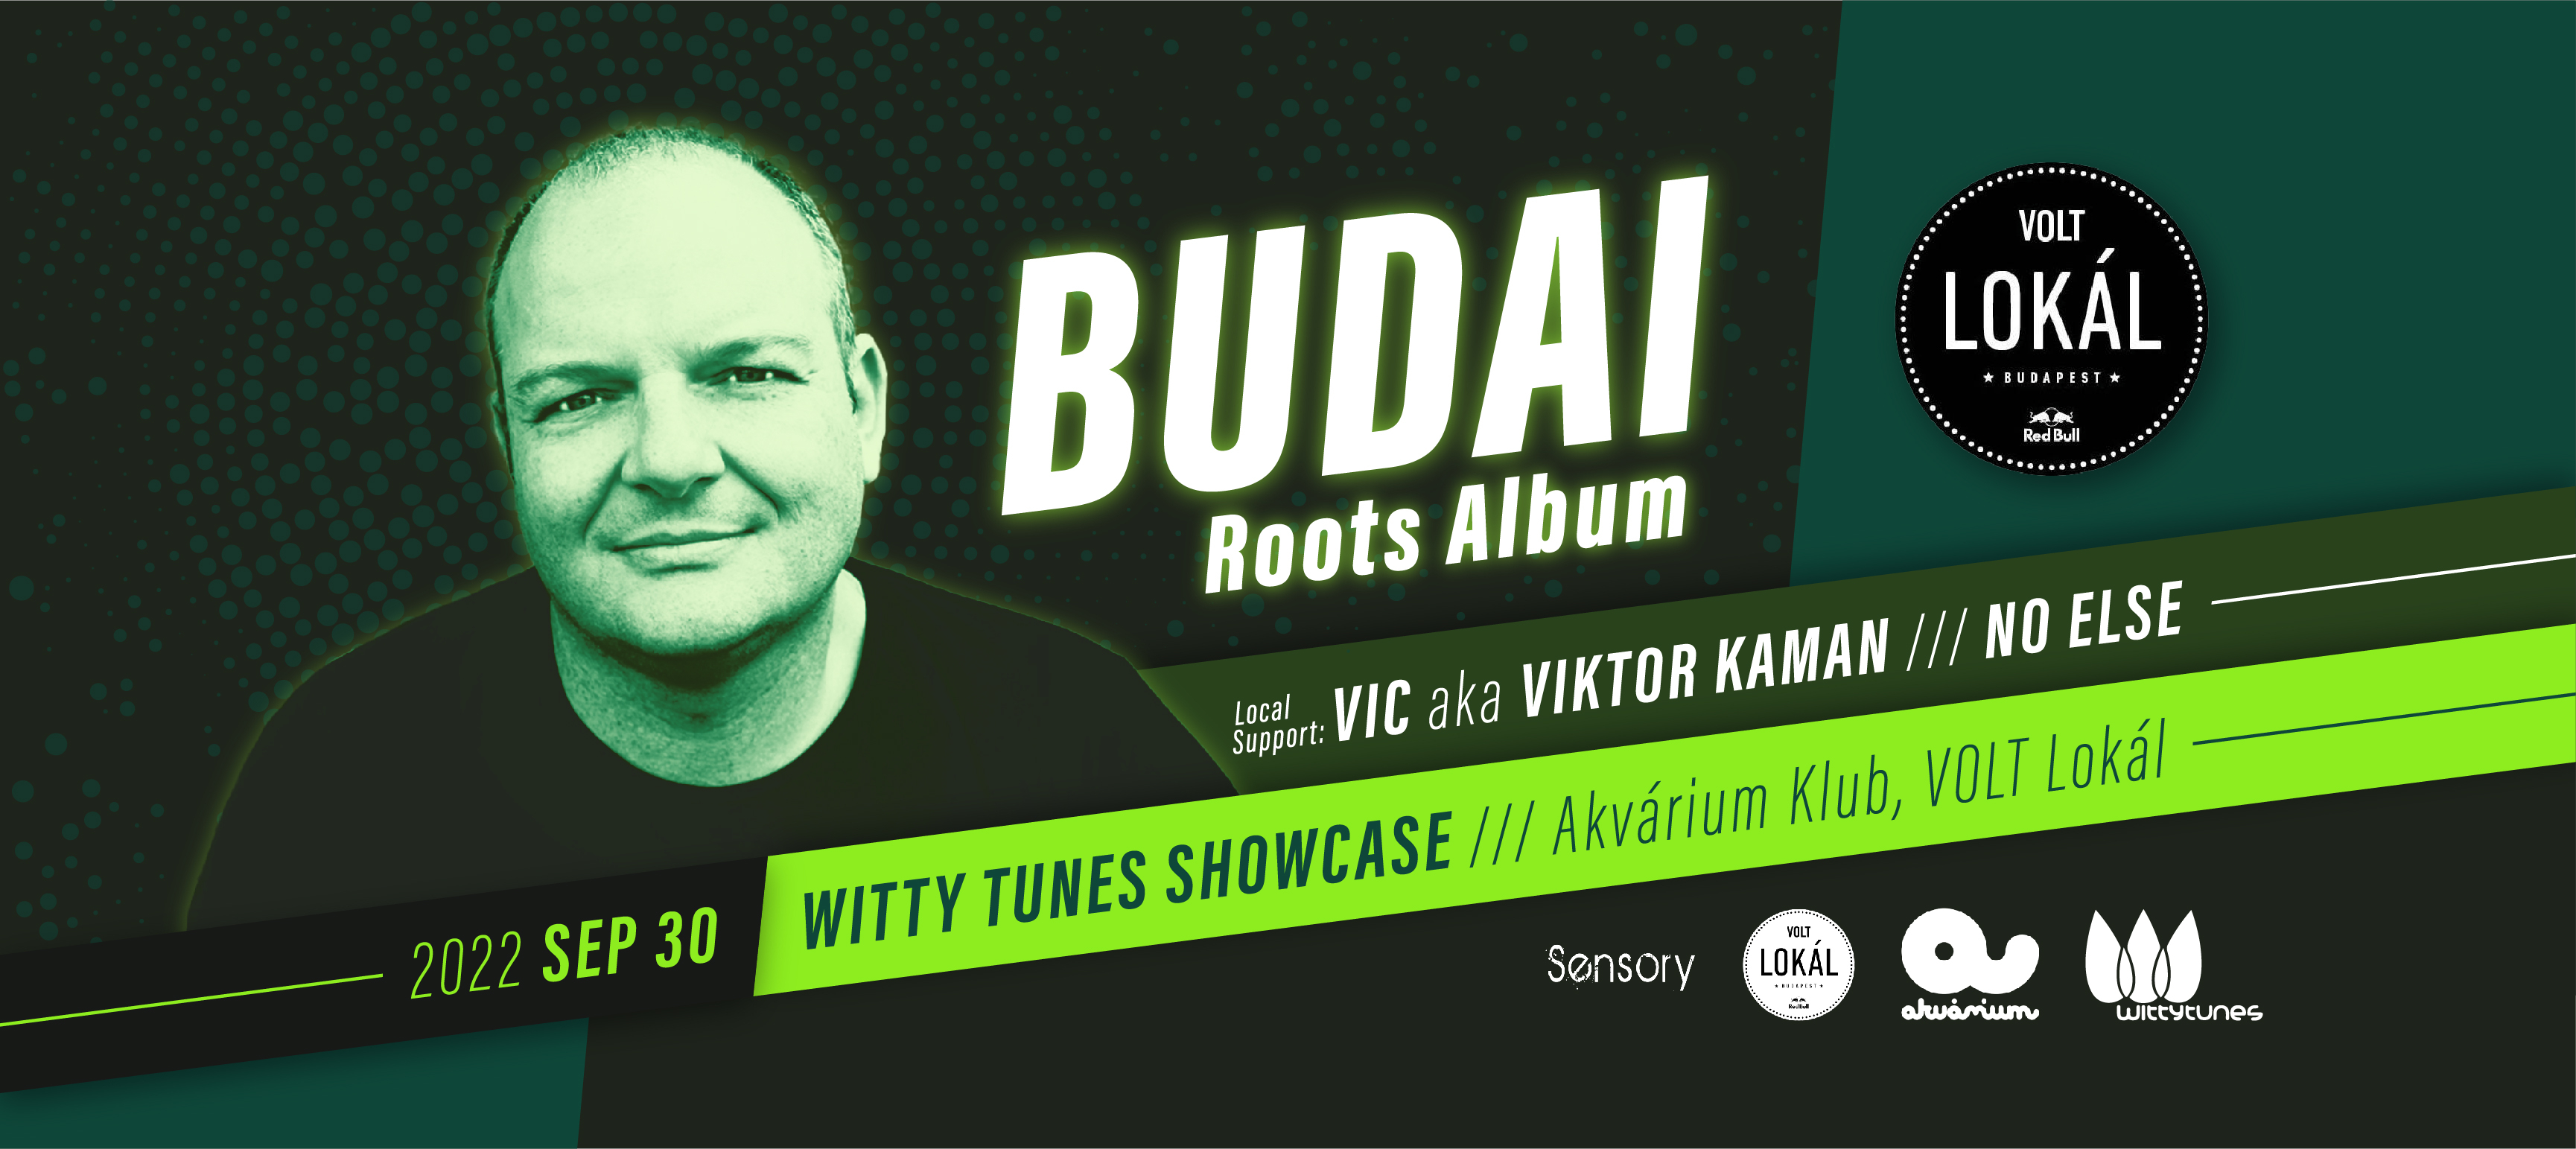 Witty Tunes pres. Budai Roots Album (Akvárium Klub) - Flyer front